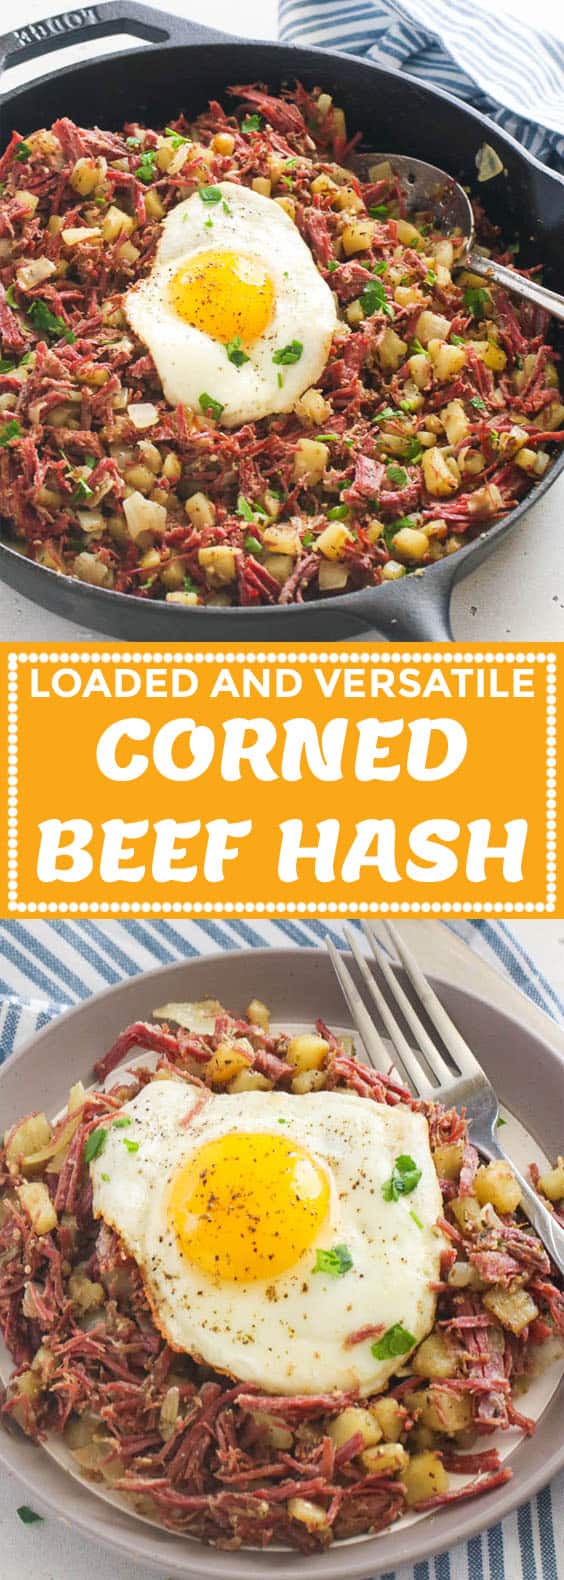 Corned Beef Hash - Immaculate Bites